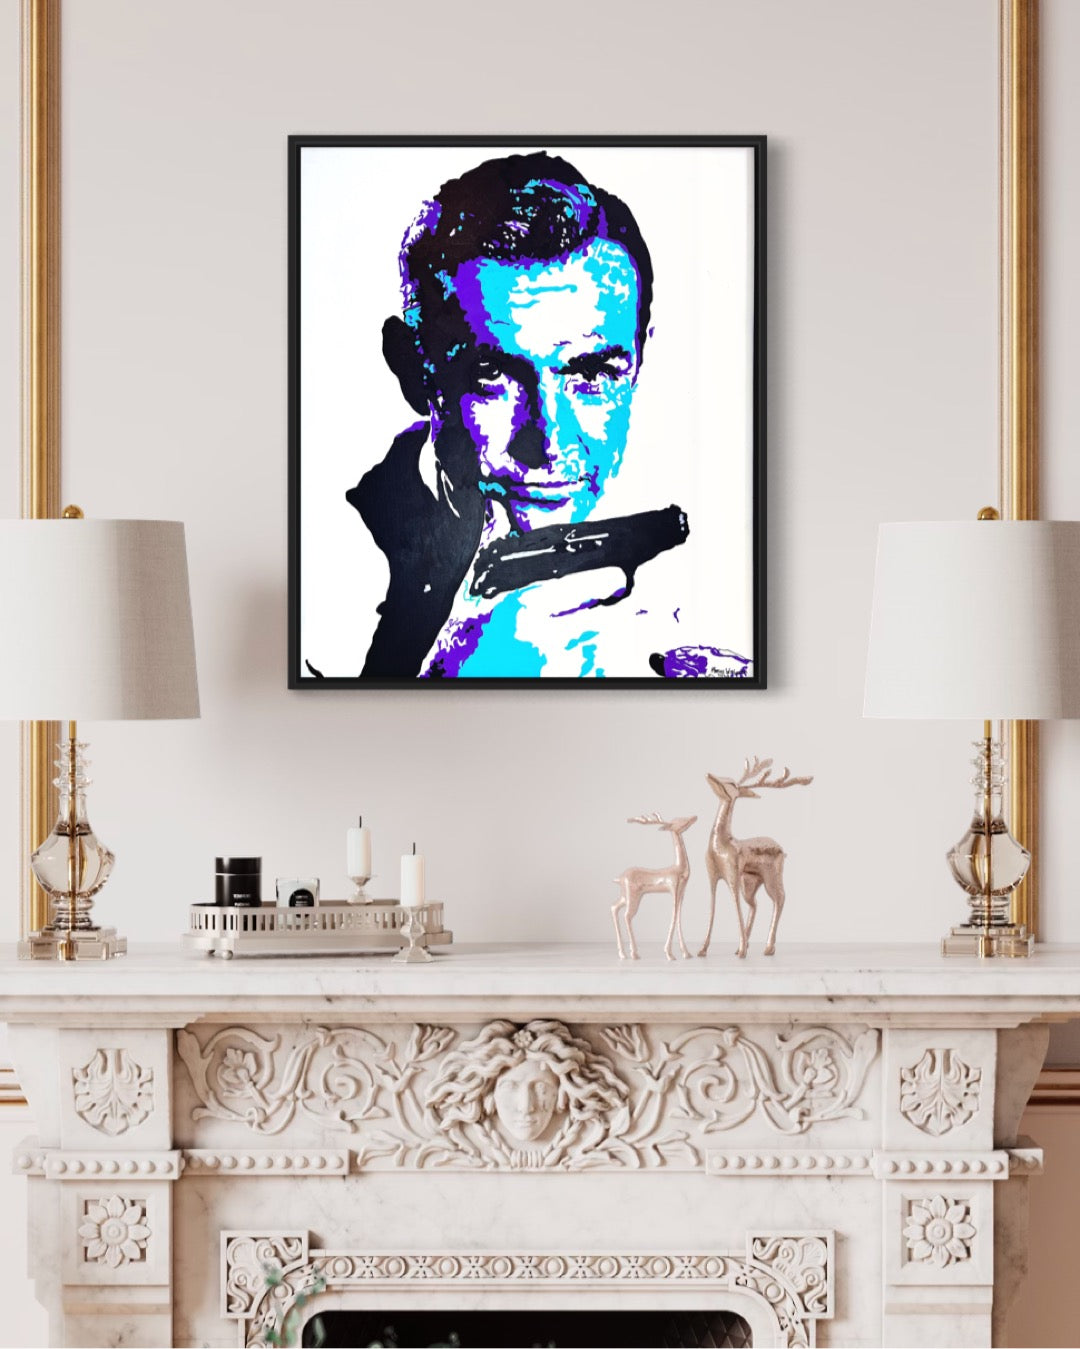 Sean Connery as Bond. James Bond